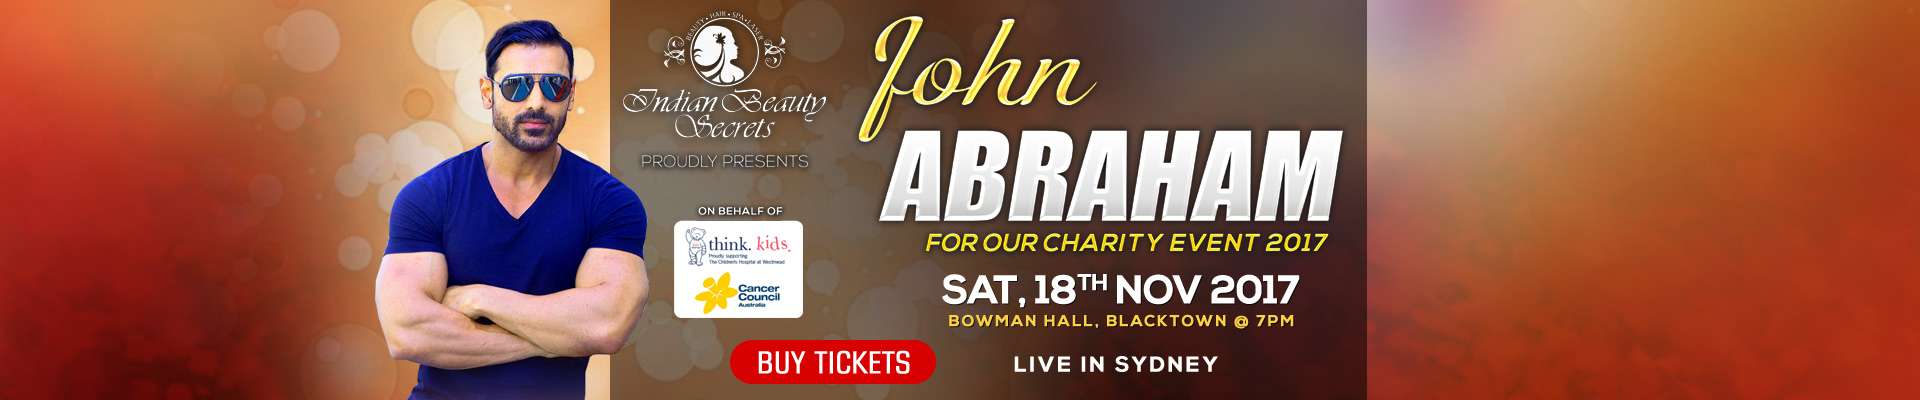 John Abraham - Charity Event 2017